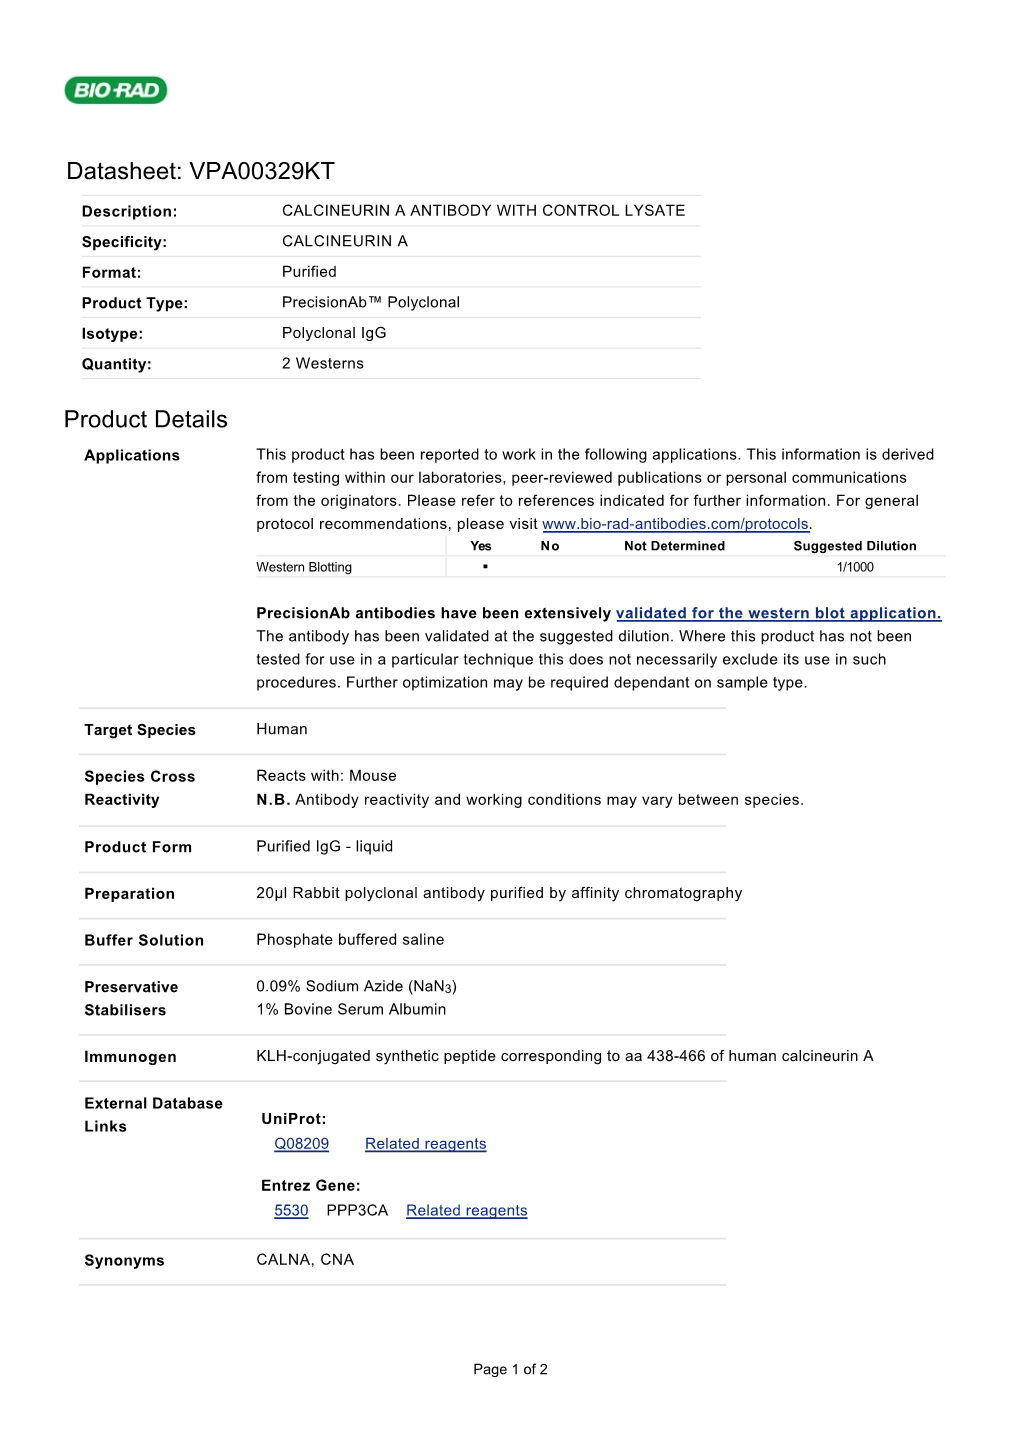 Datasheet: VPA00329KT Product Details